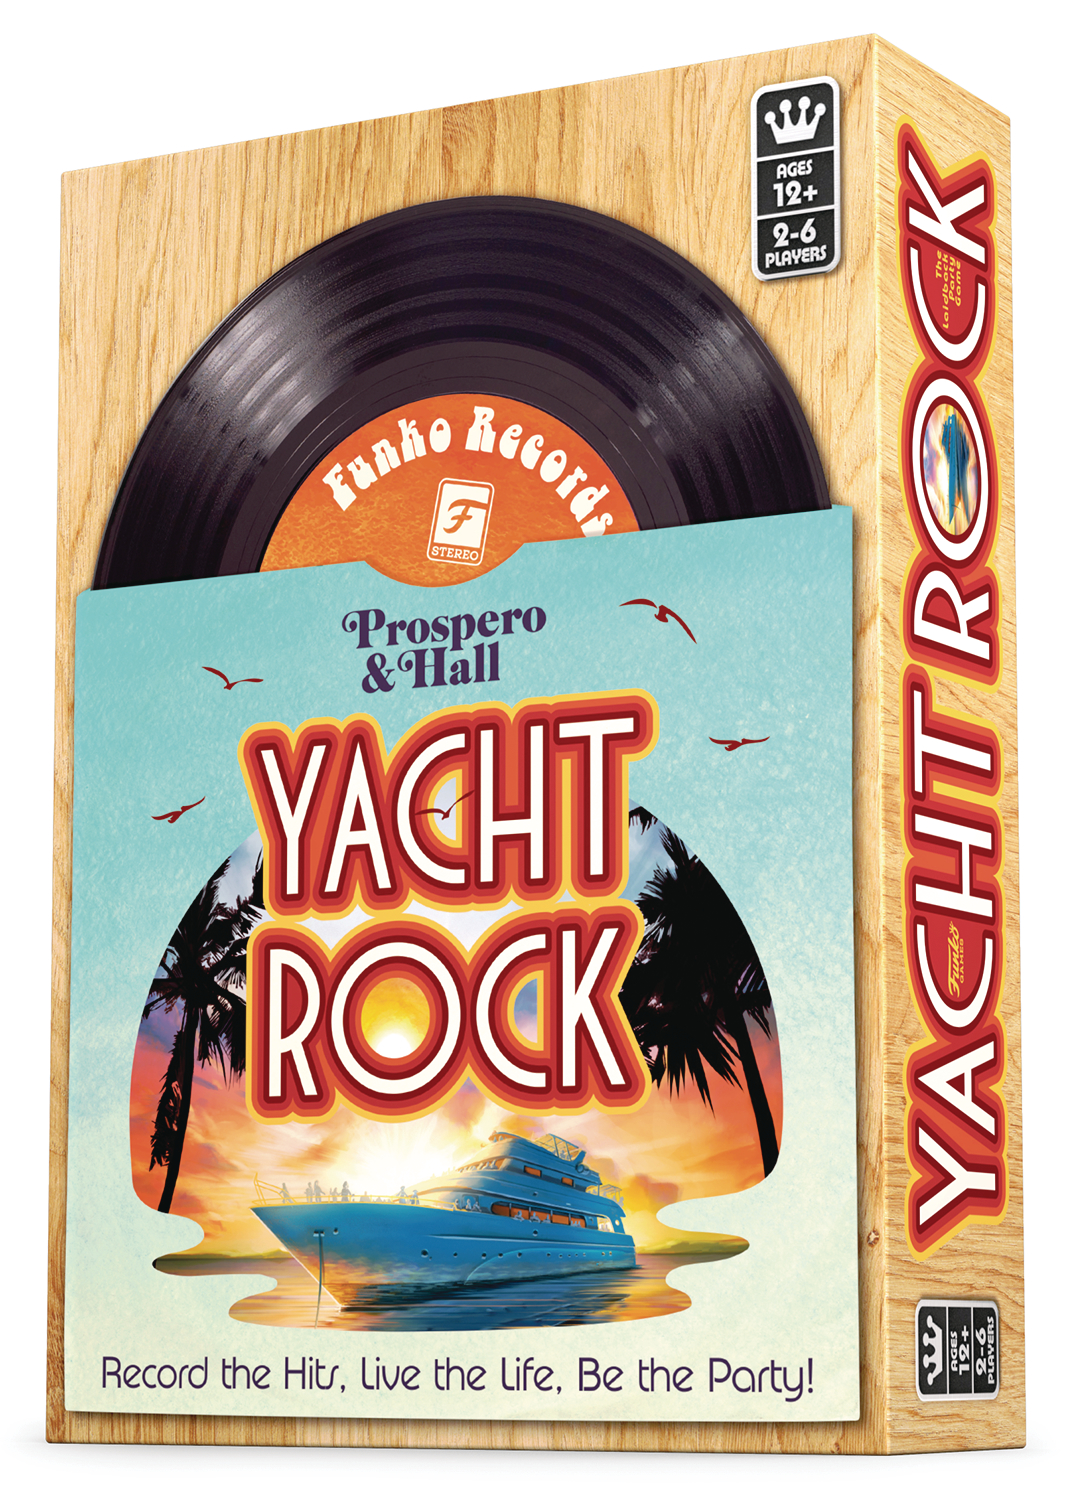 Funko Yacht Rock Game